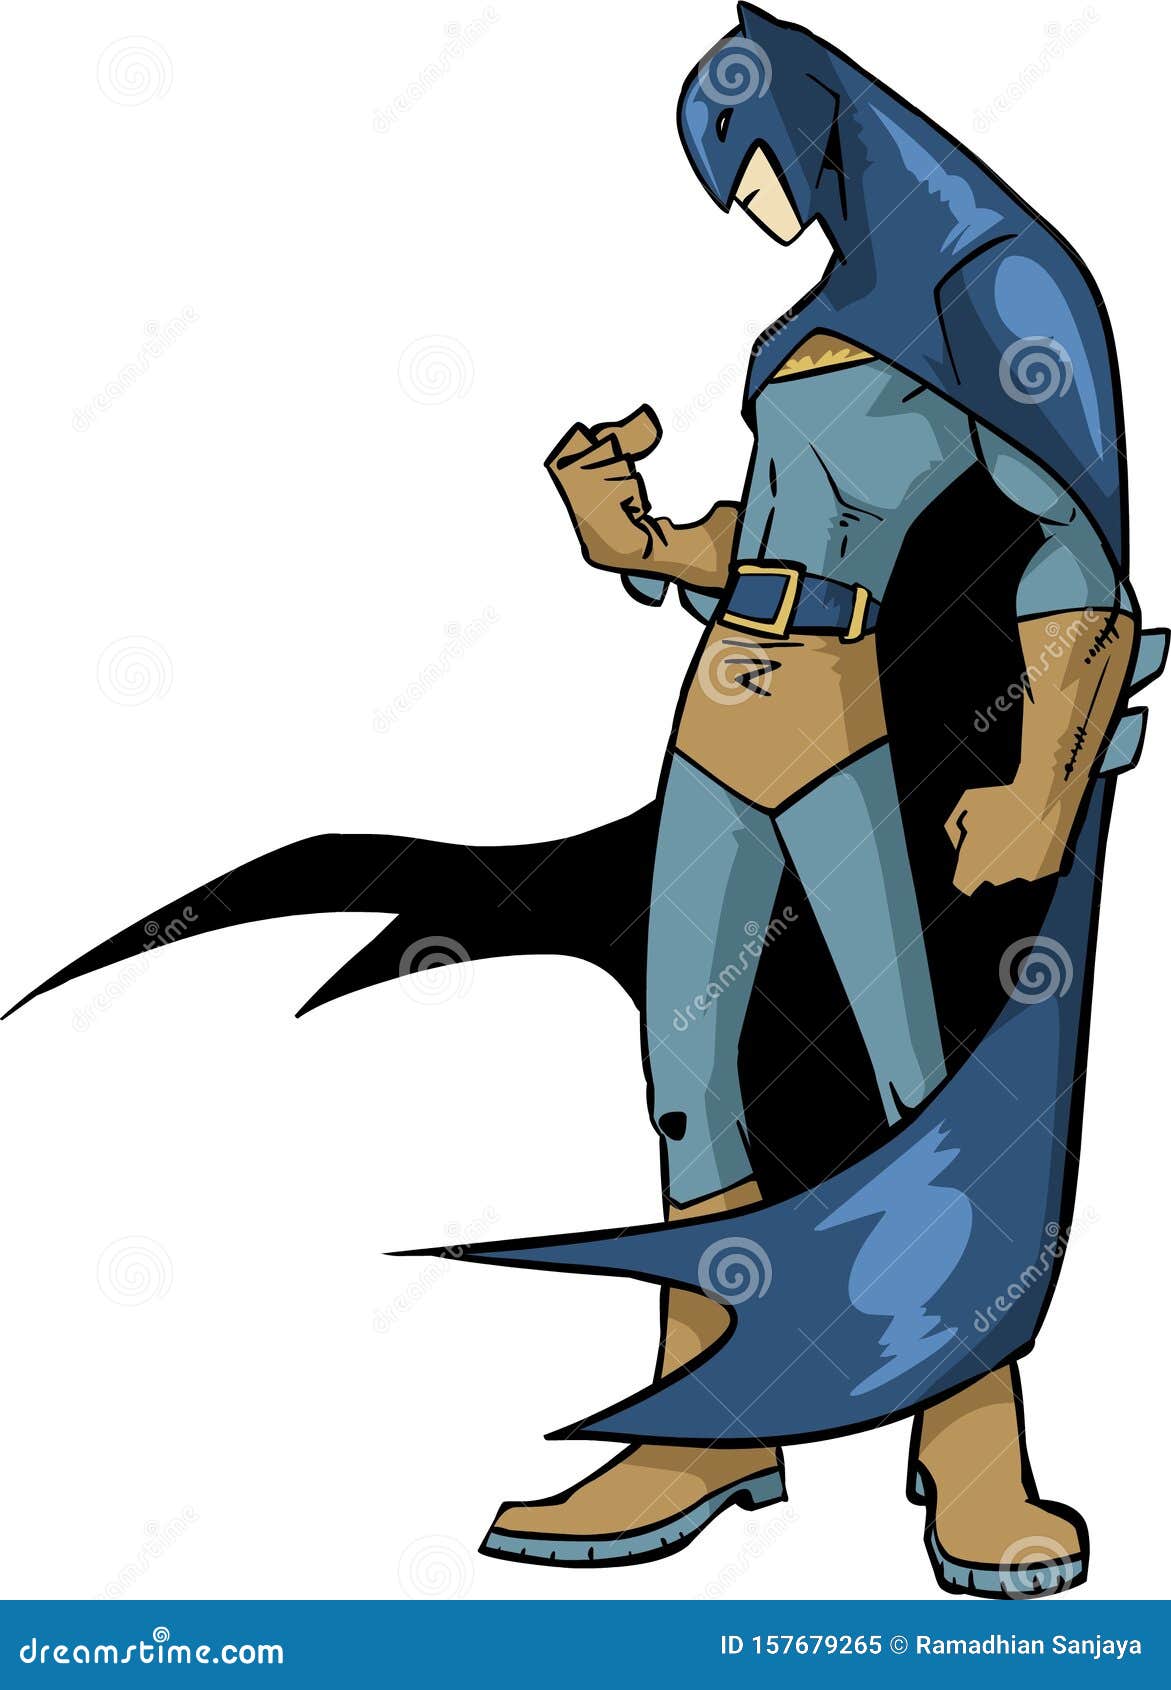 Batman Superhero Dc Comic Standing Cartoon Pose With Cartoon Style Unique Bright Color Editorial Image Illustration Of Enemy Pose 157679265